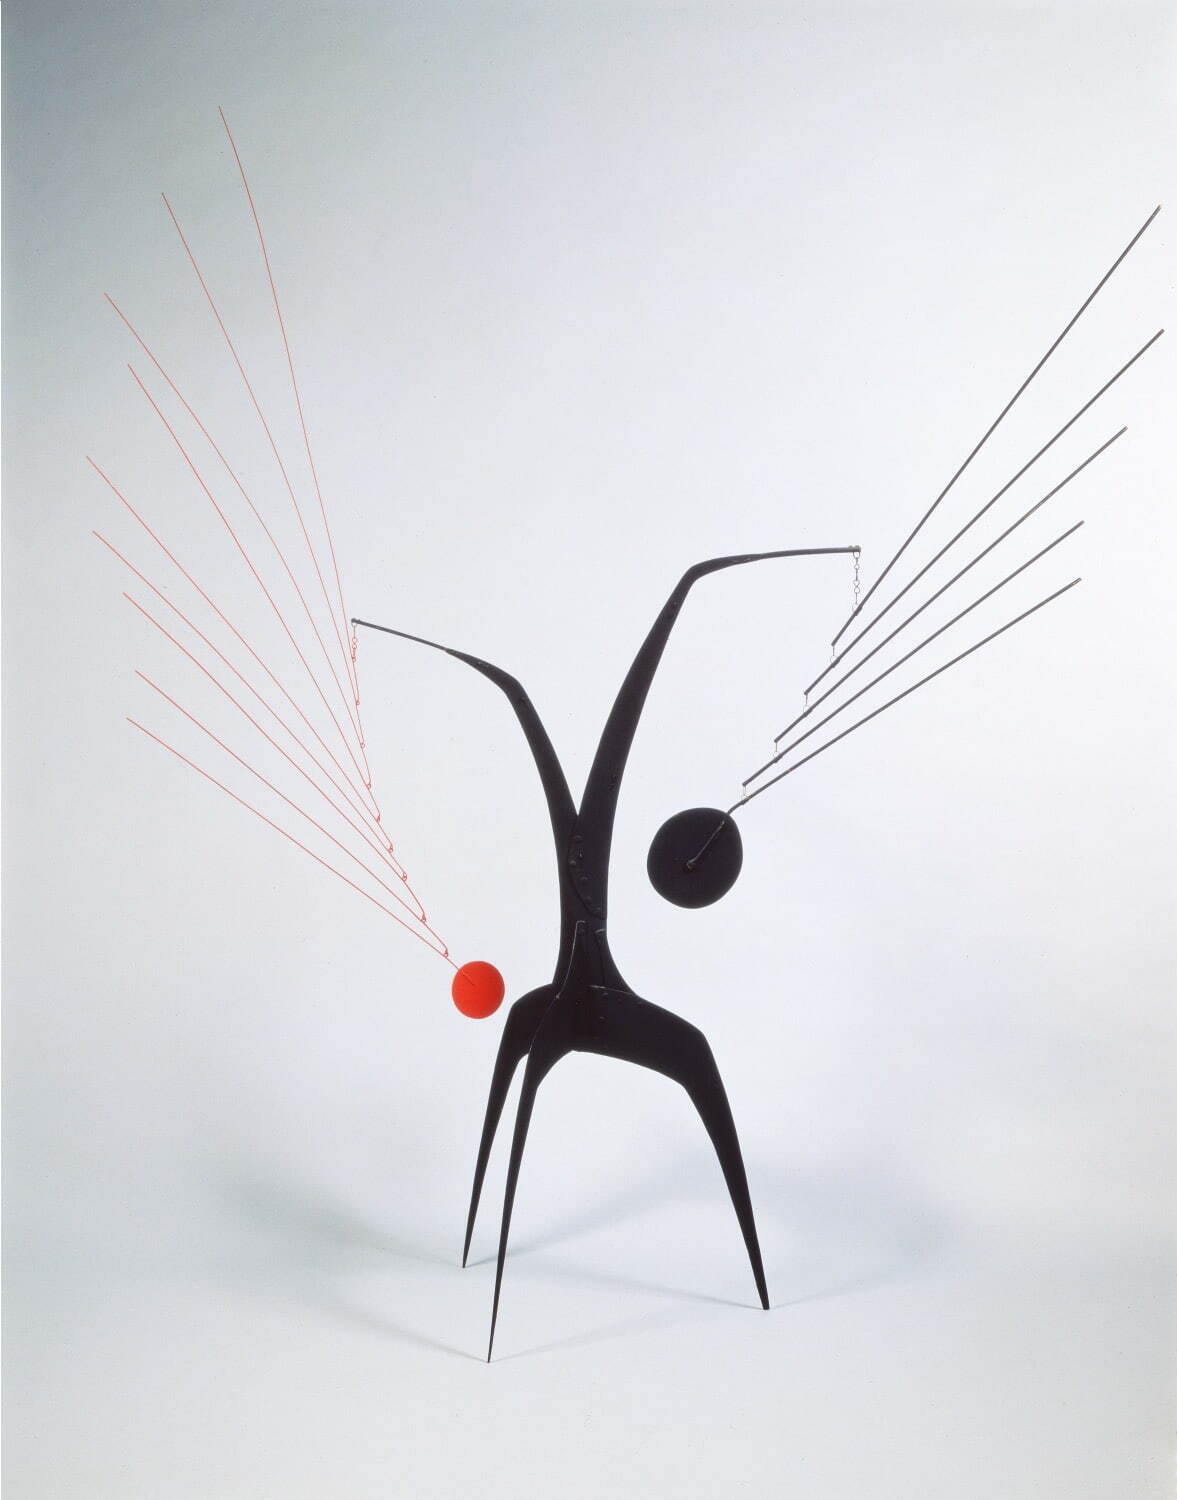 Alexander Calder, <i width="1177" height="1500">Un effet du japonais,</i> 1941
Sheet metal, wire, rod, and paint 203.2×203.2×121.9cm.